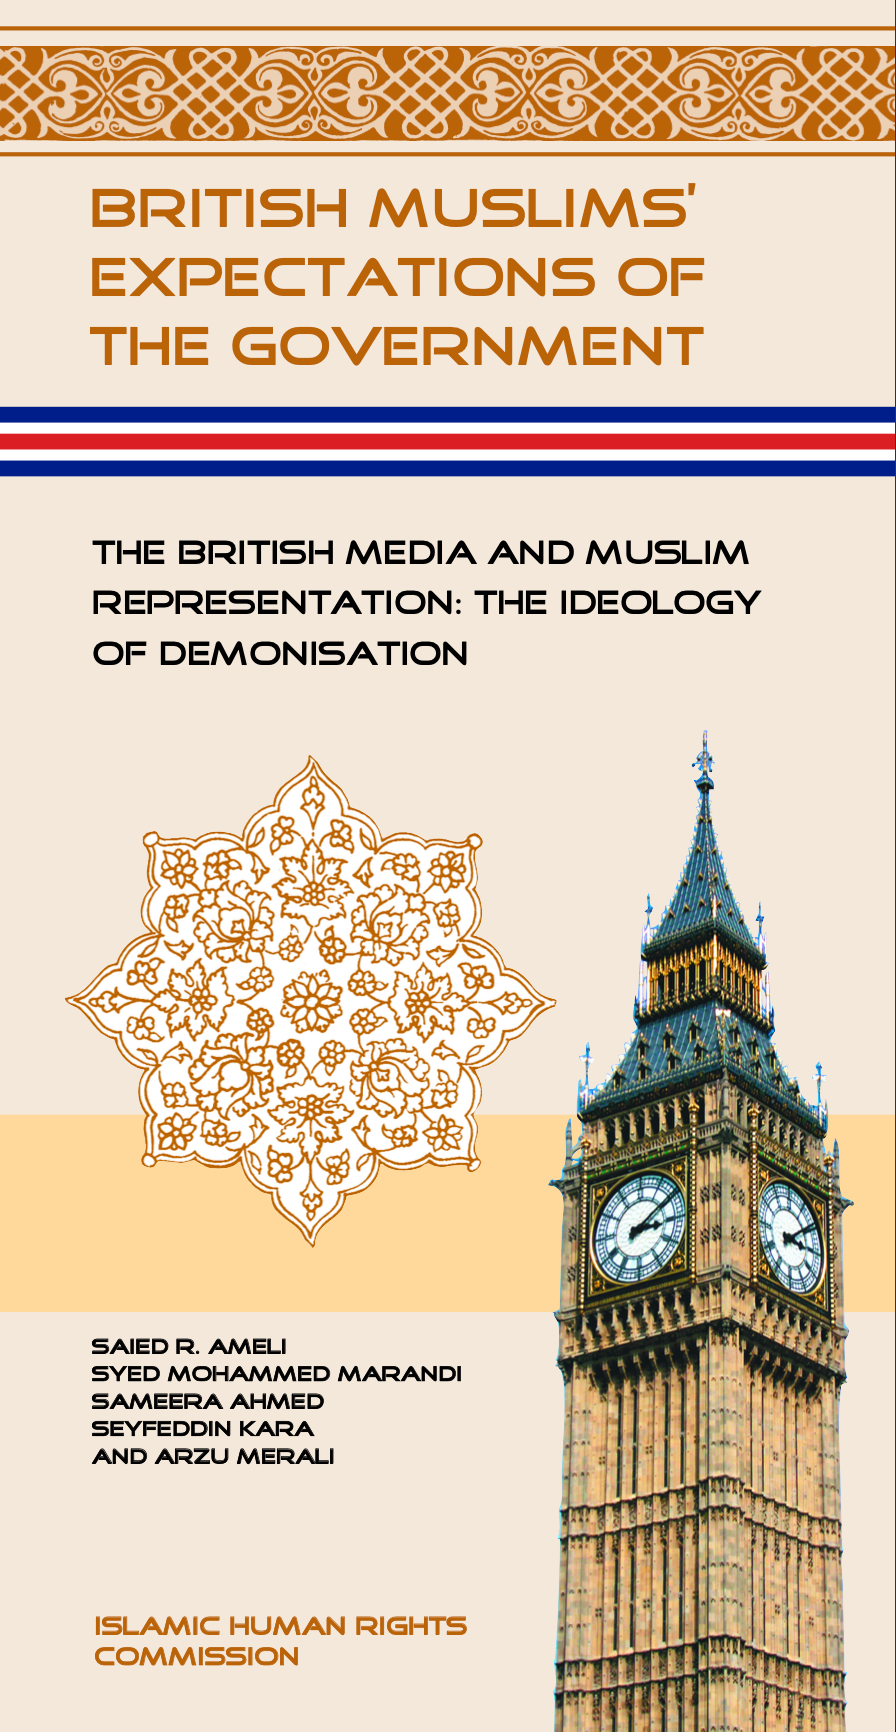 The British Media And Muslim Representation: The Ideology of Demonisation (Volume 6) - S.R. Ameli, Marandi, S.M., Ahmed, S. Kara, S. and Merali, A.